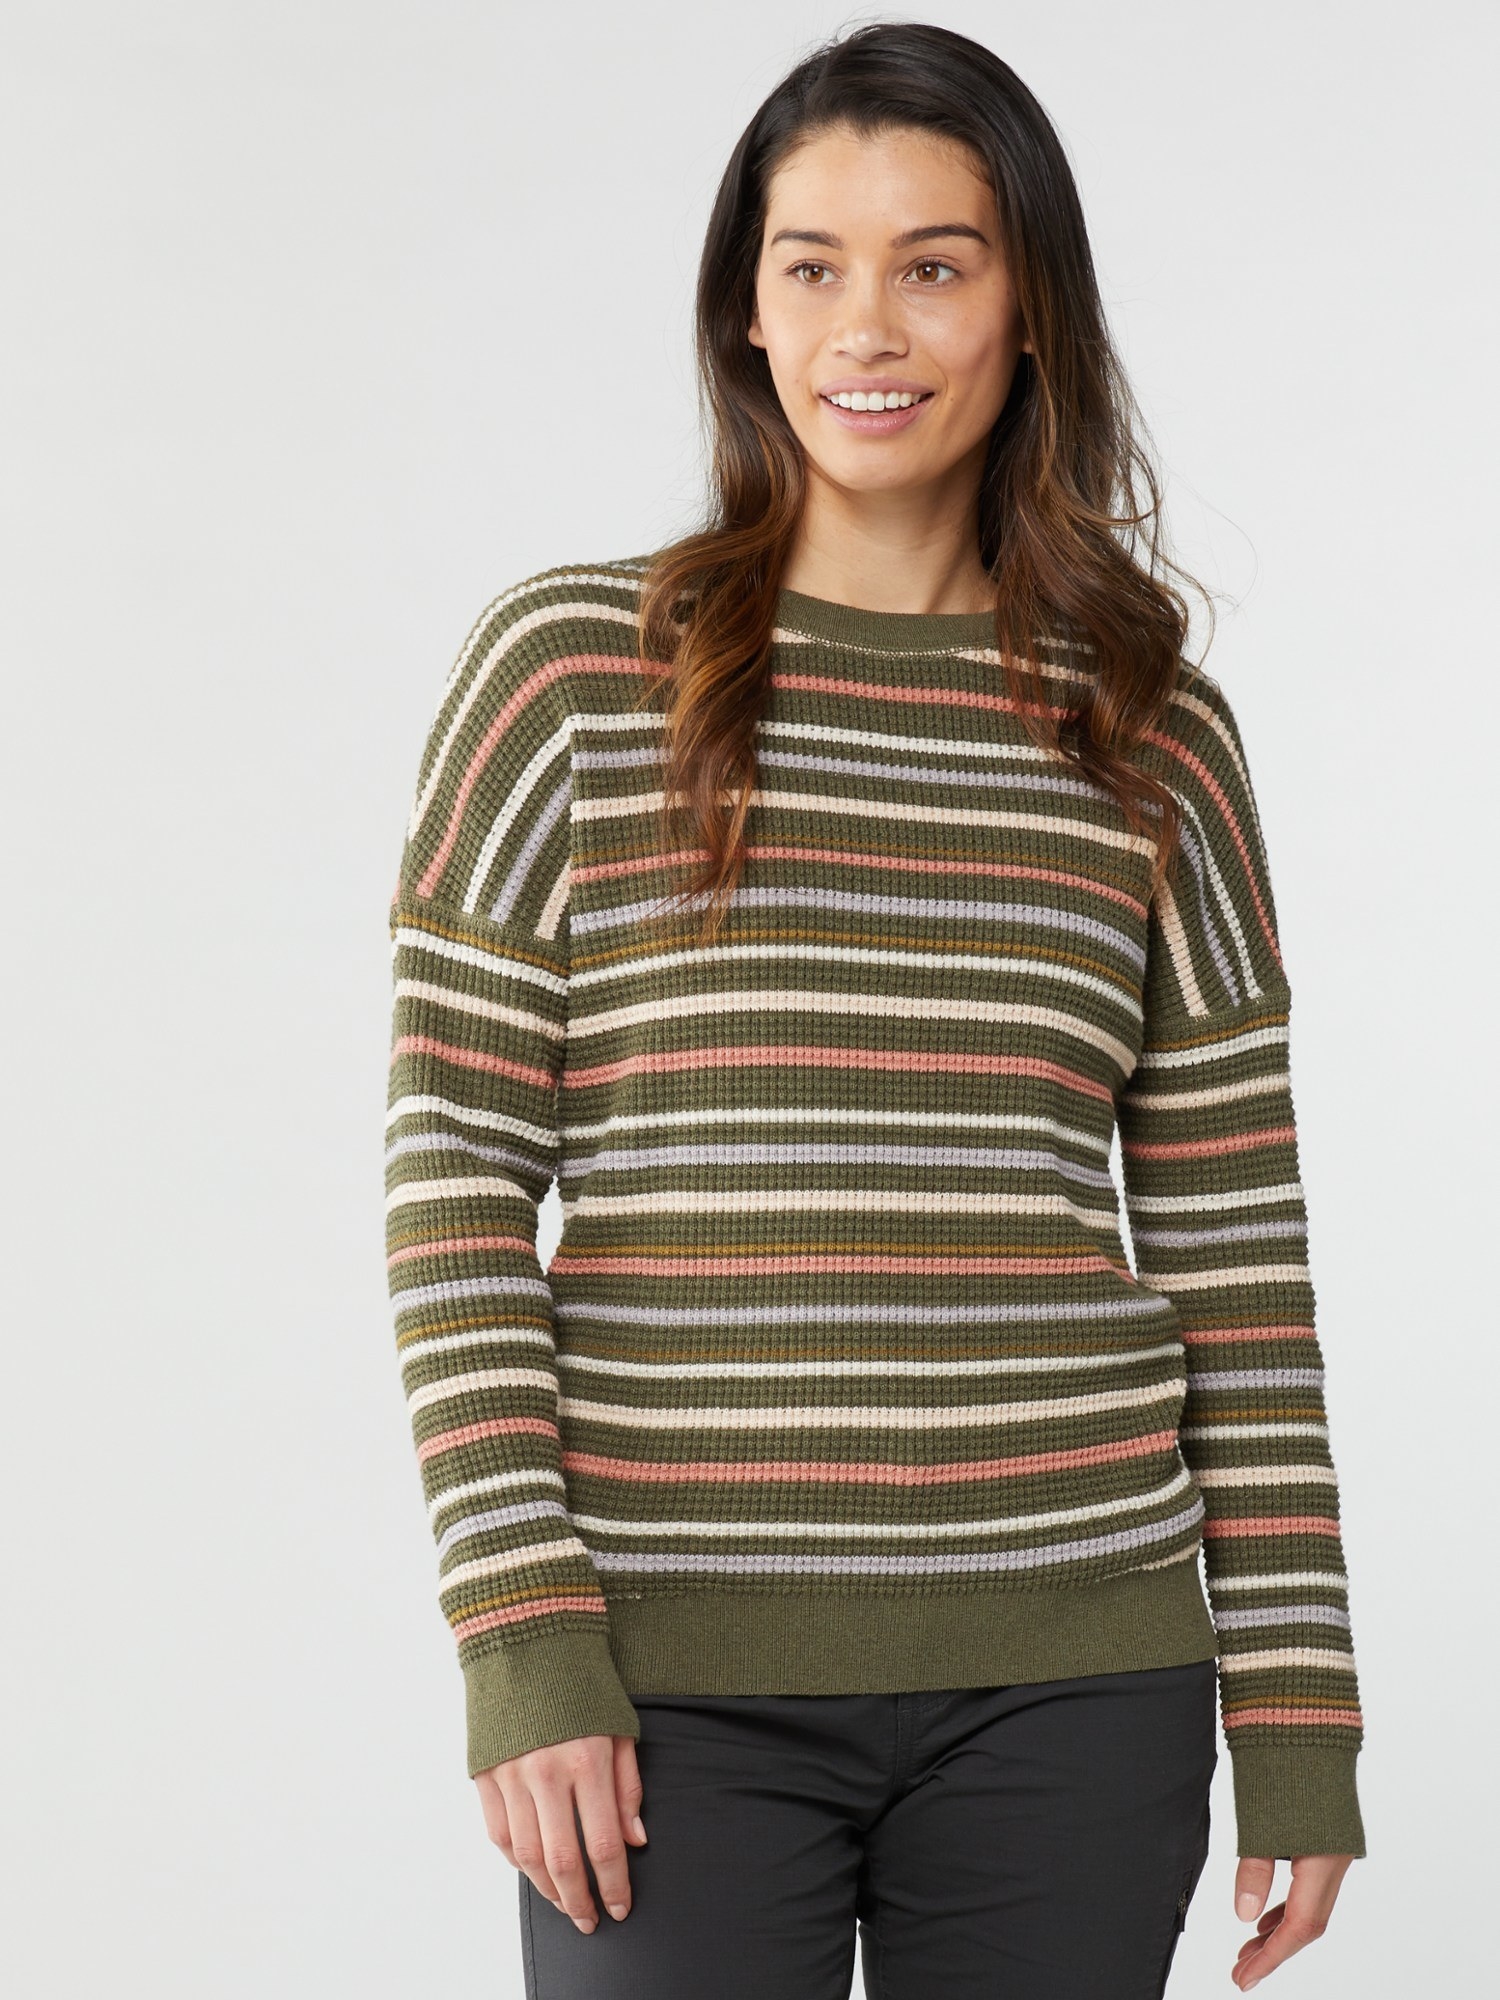 Model wearing the green striped long-sleeve sweater